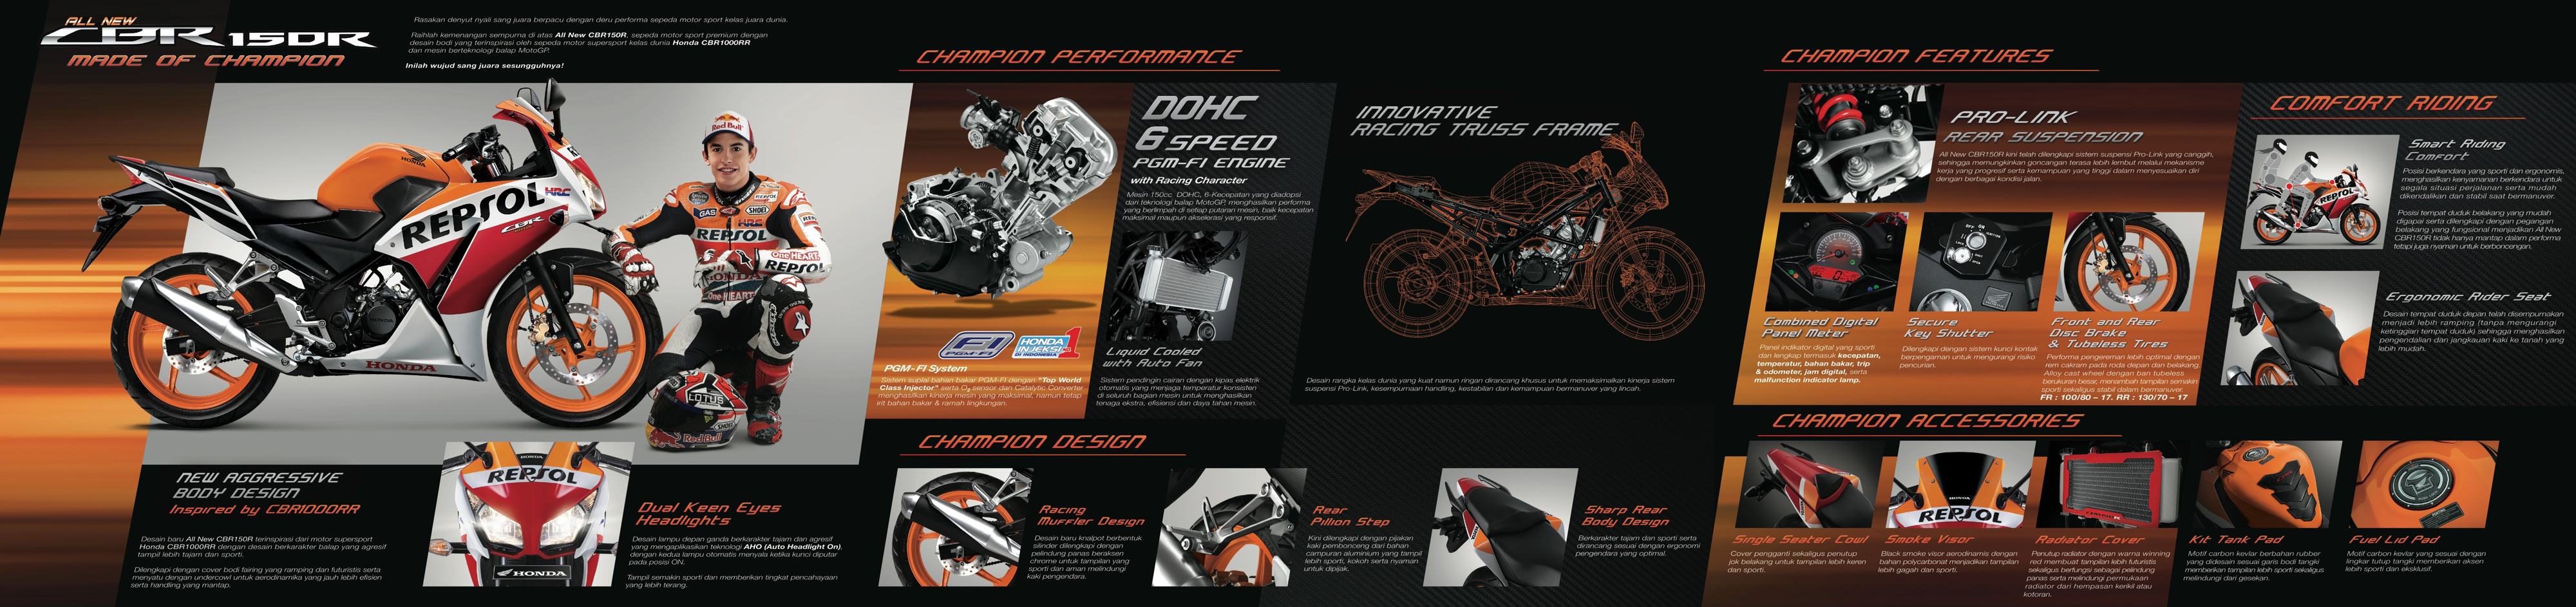 2015 All New Honda CBR 150R MotoReds